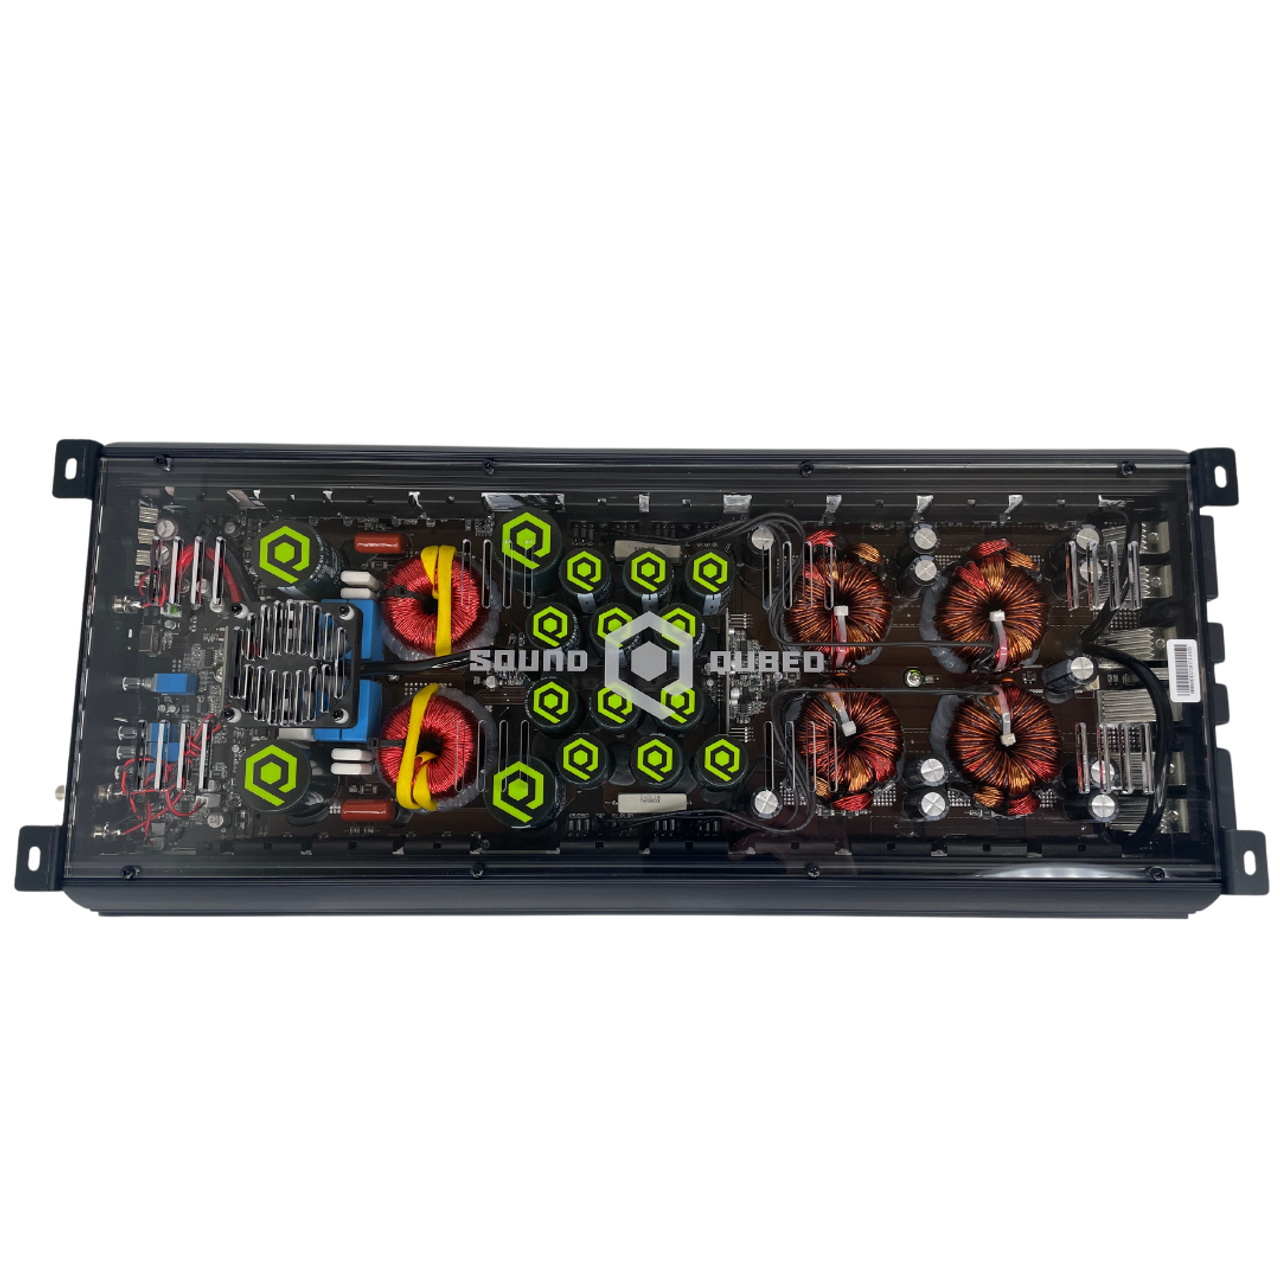 SOUNDQUBED Q1-8000 Q Series 8000 Watt Mono Block Amplifier